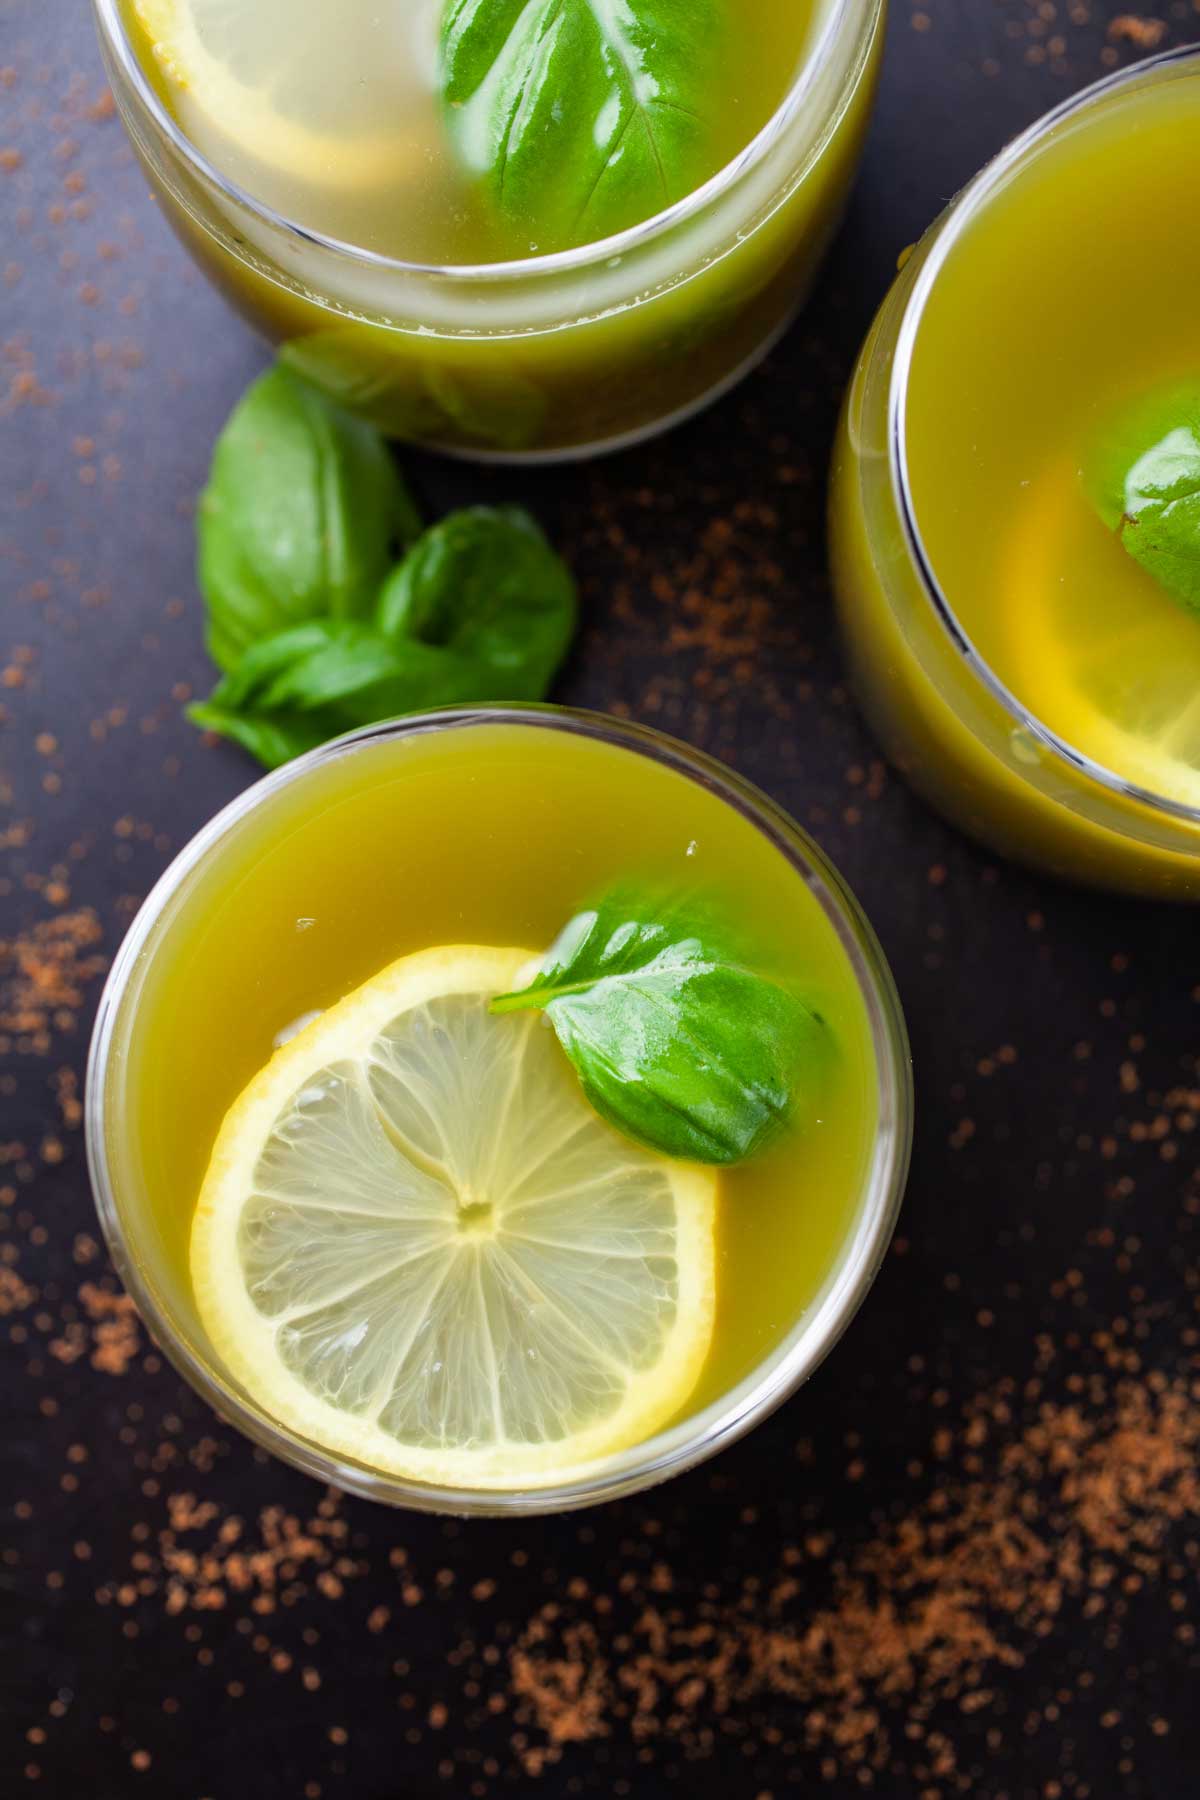 Green Basil lemonade drinks garnished with lemon wedges and fresh basil leaves.